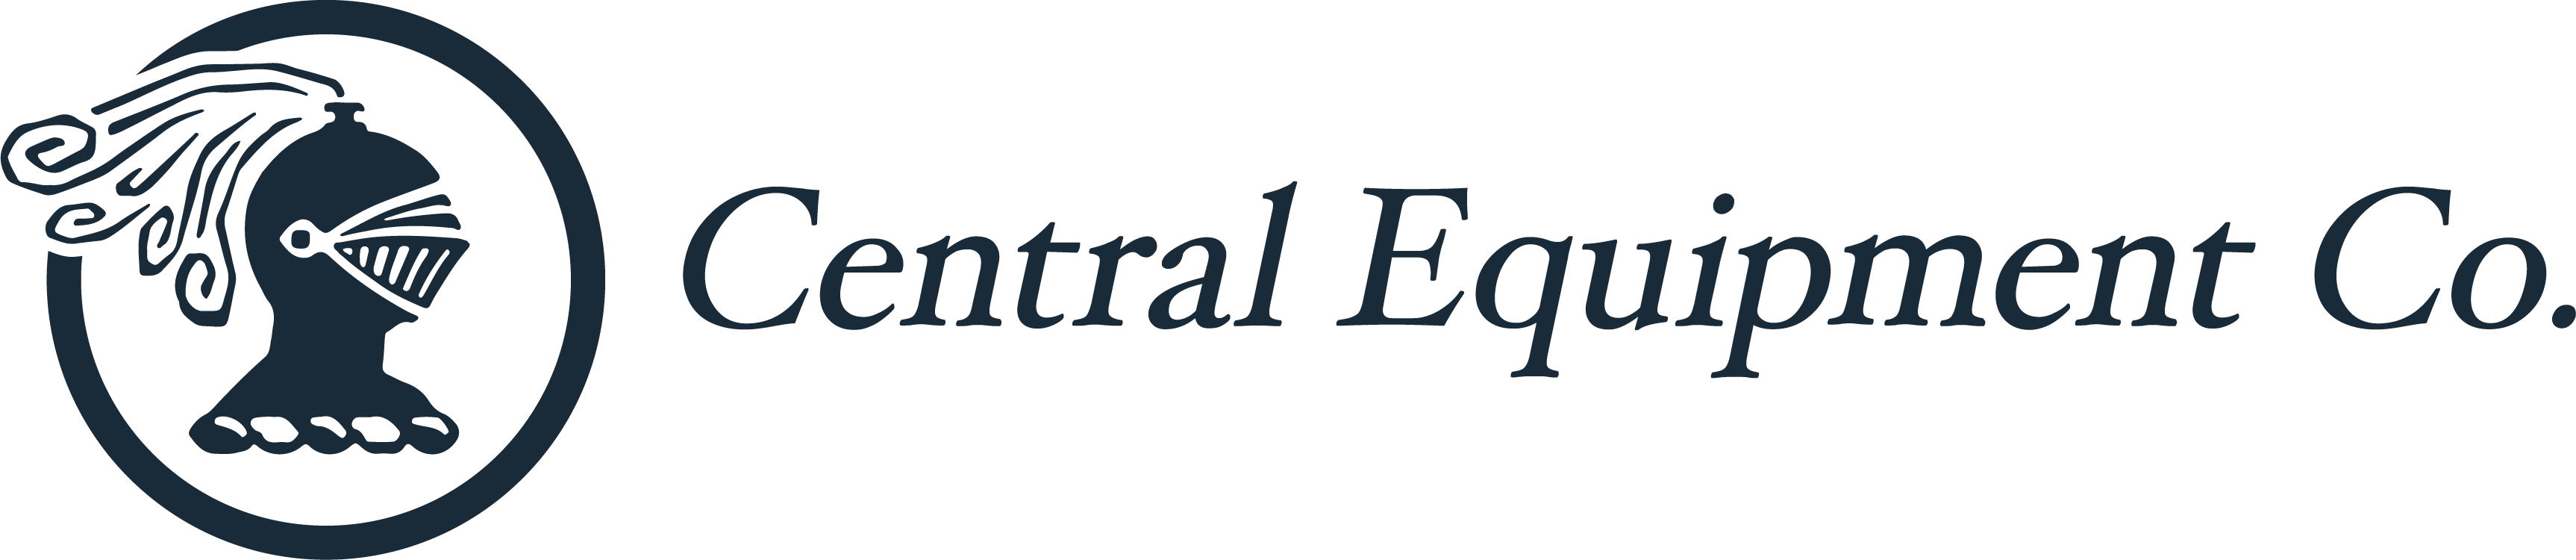 central-equipment-co-logo